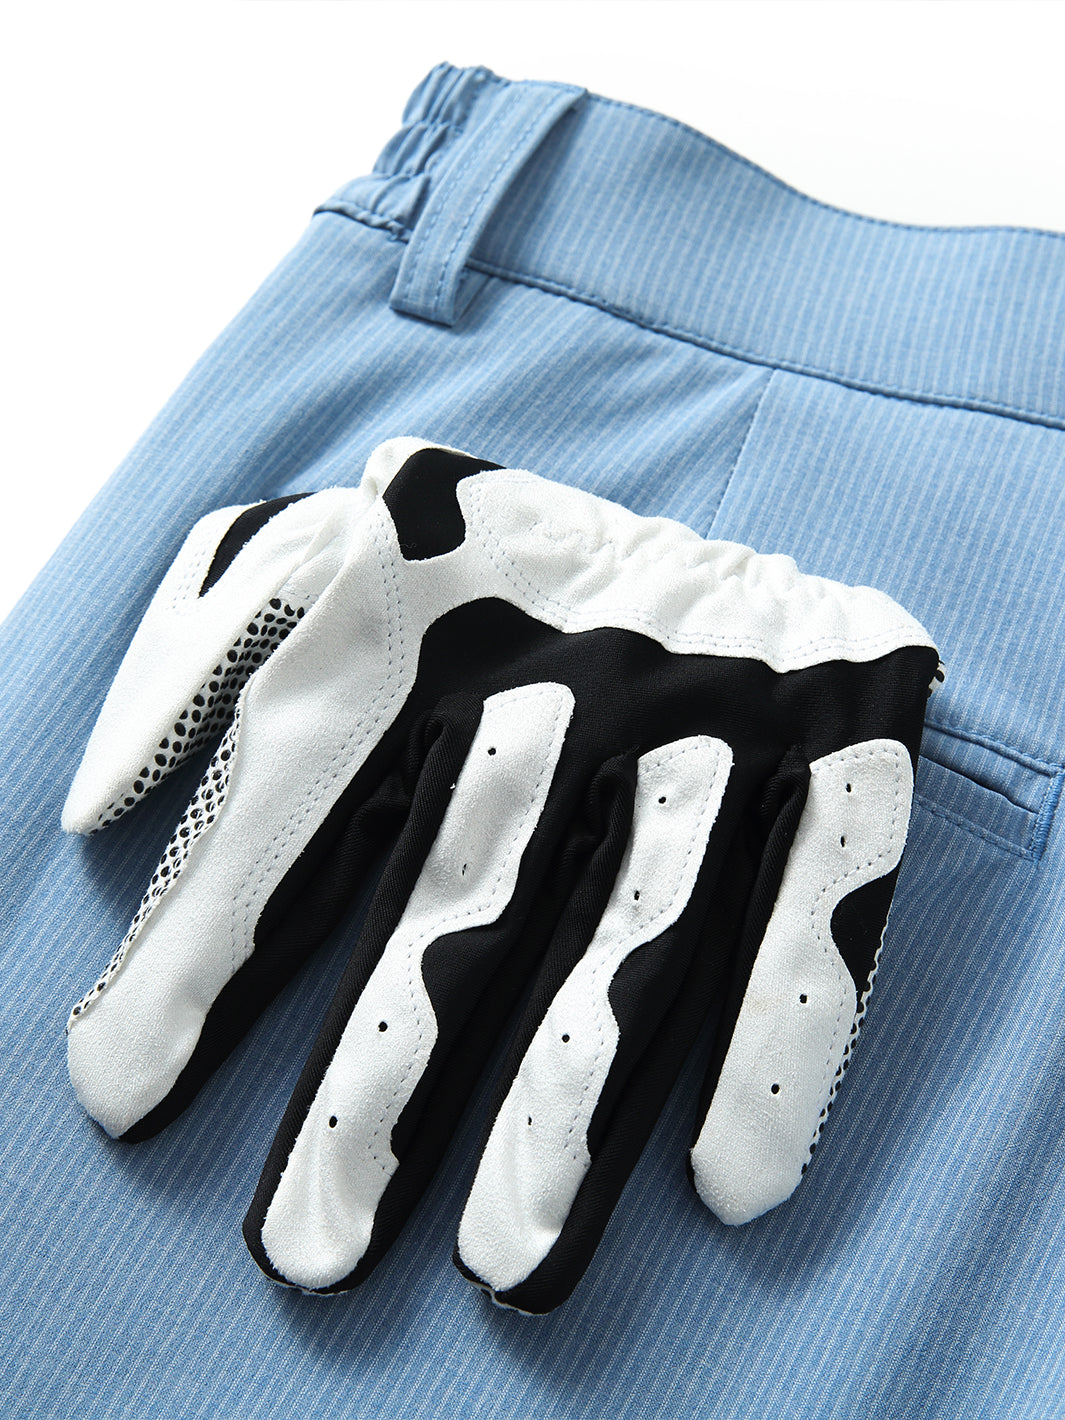 10" Inseam Striped Golf Shorts-Dusk Blue